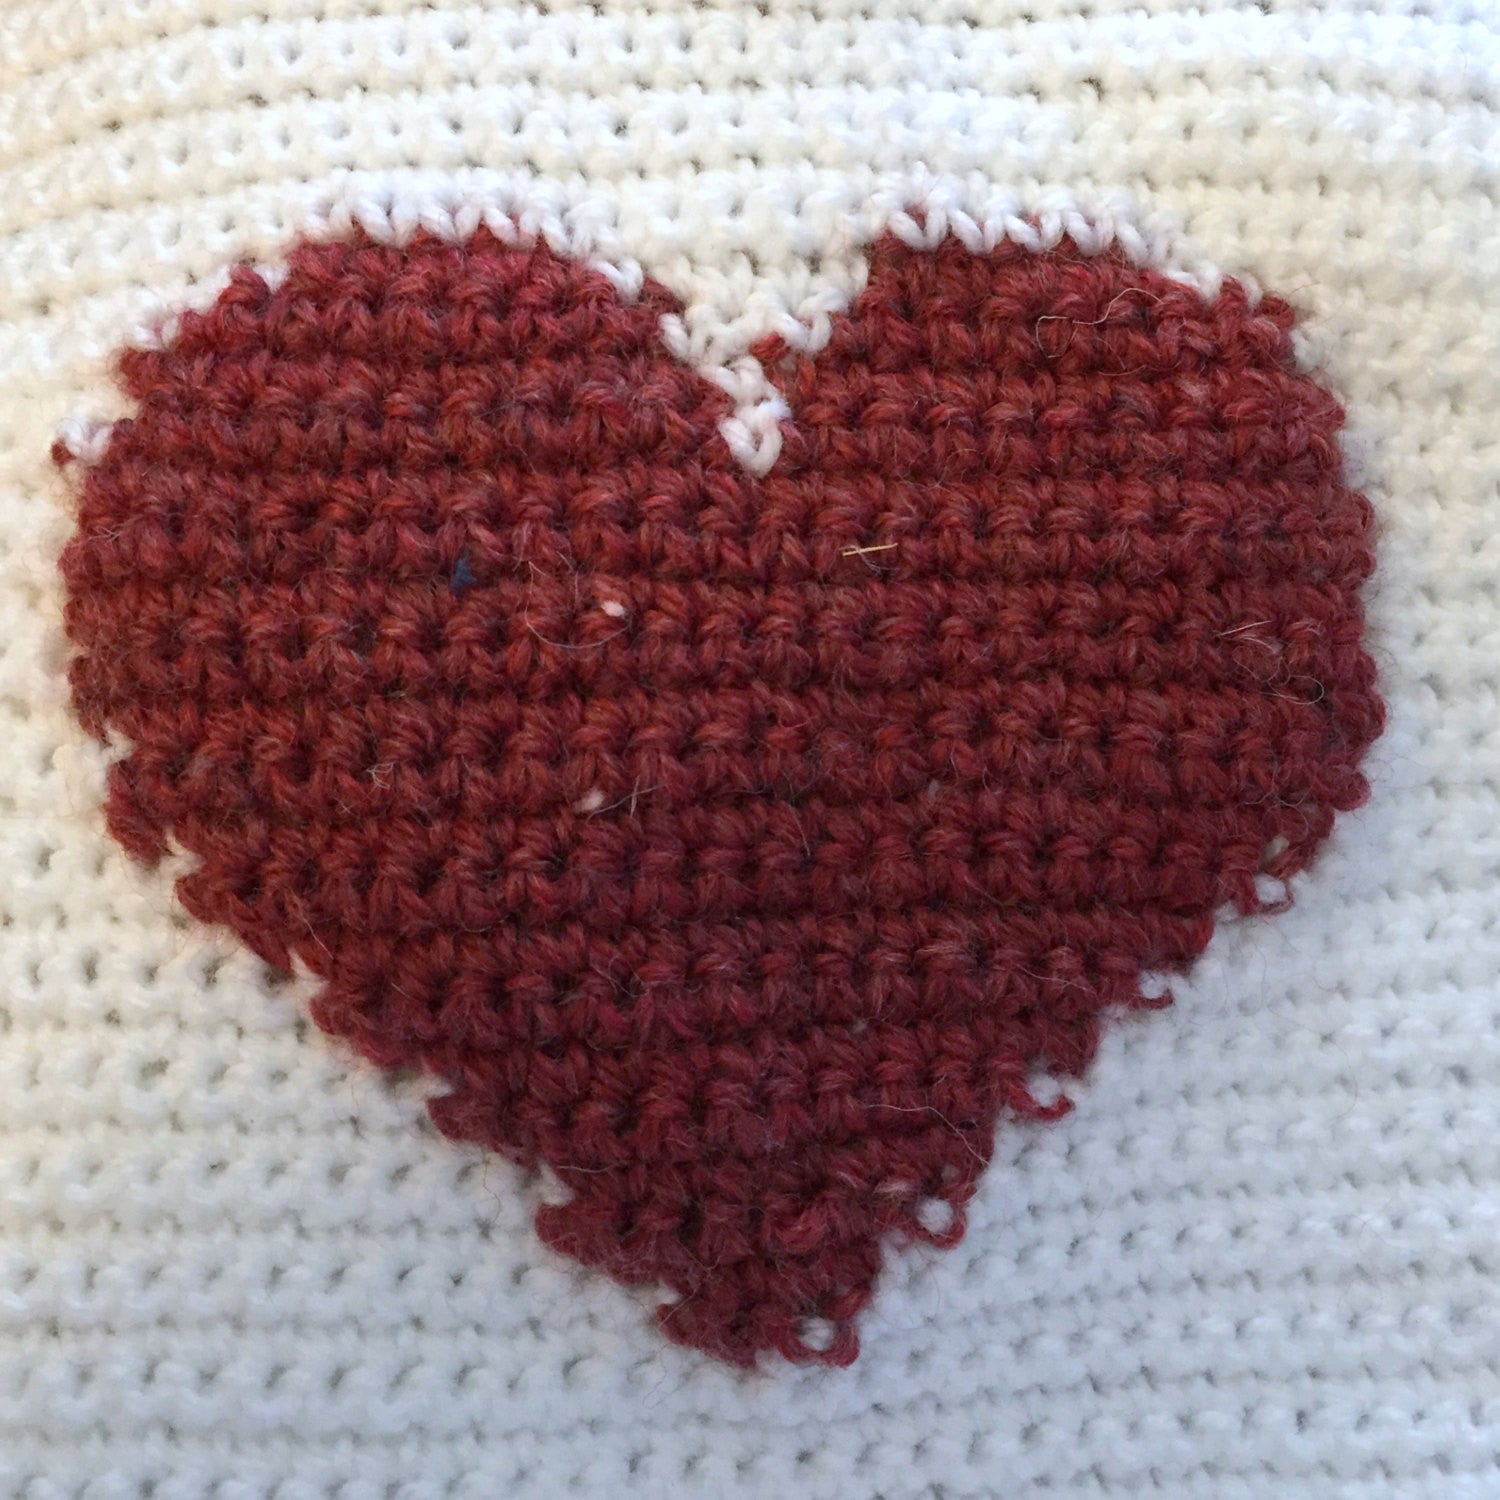 Jovial Hearts Crochet Pillow // Crochet PDF Pattern